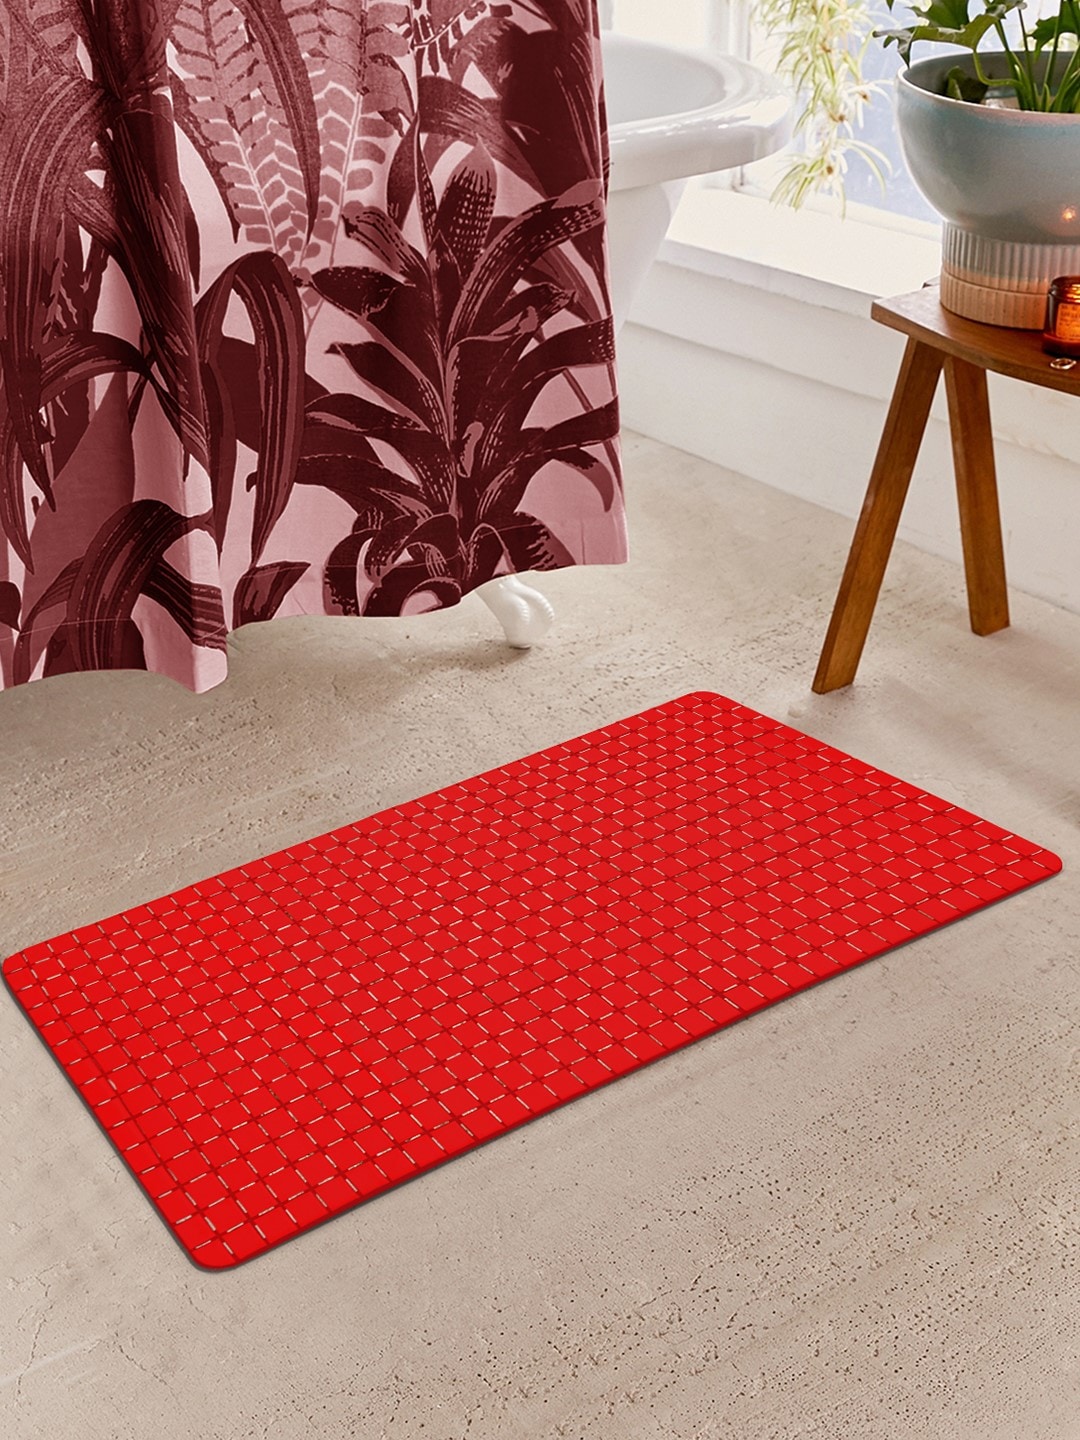 Story@Home Red PVC Anti-Slip Floor Mat Price in India